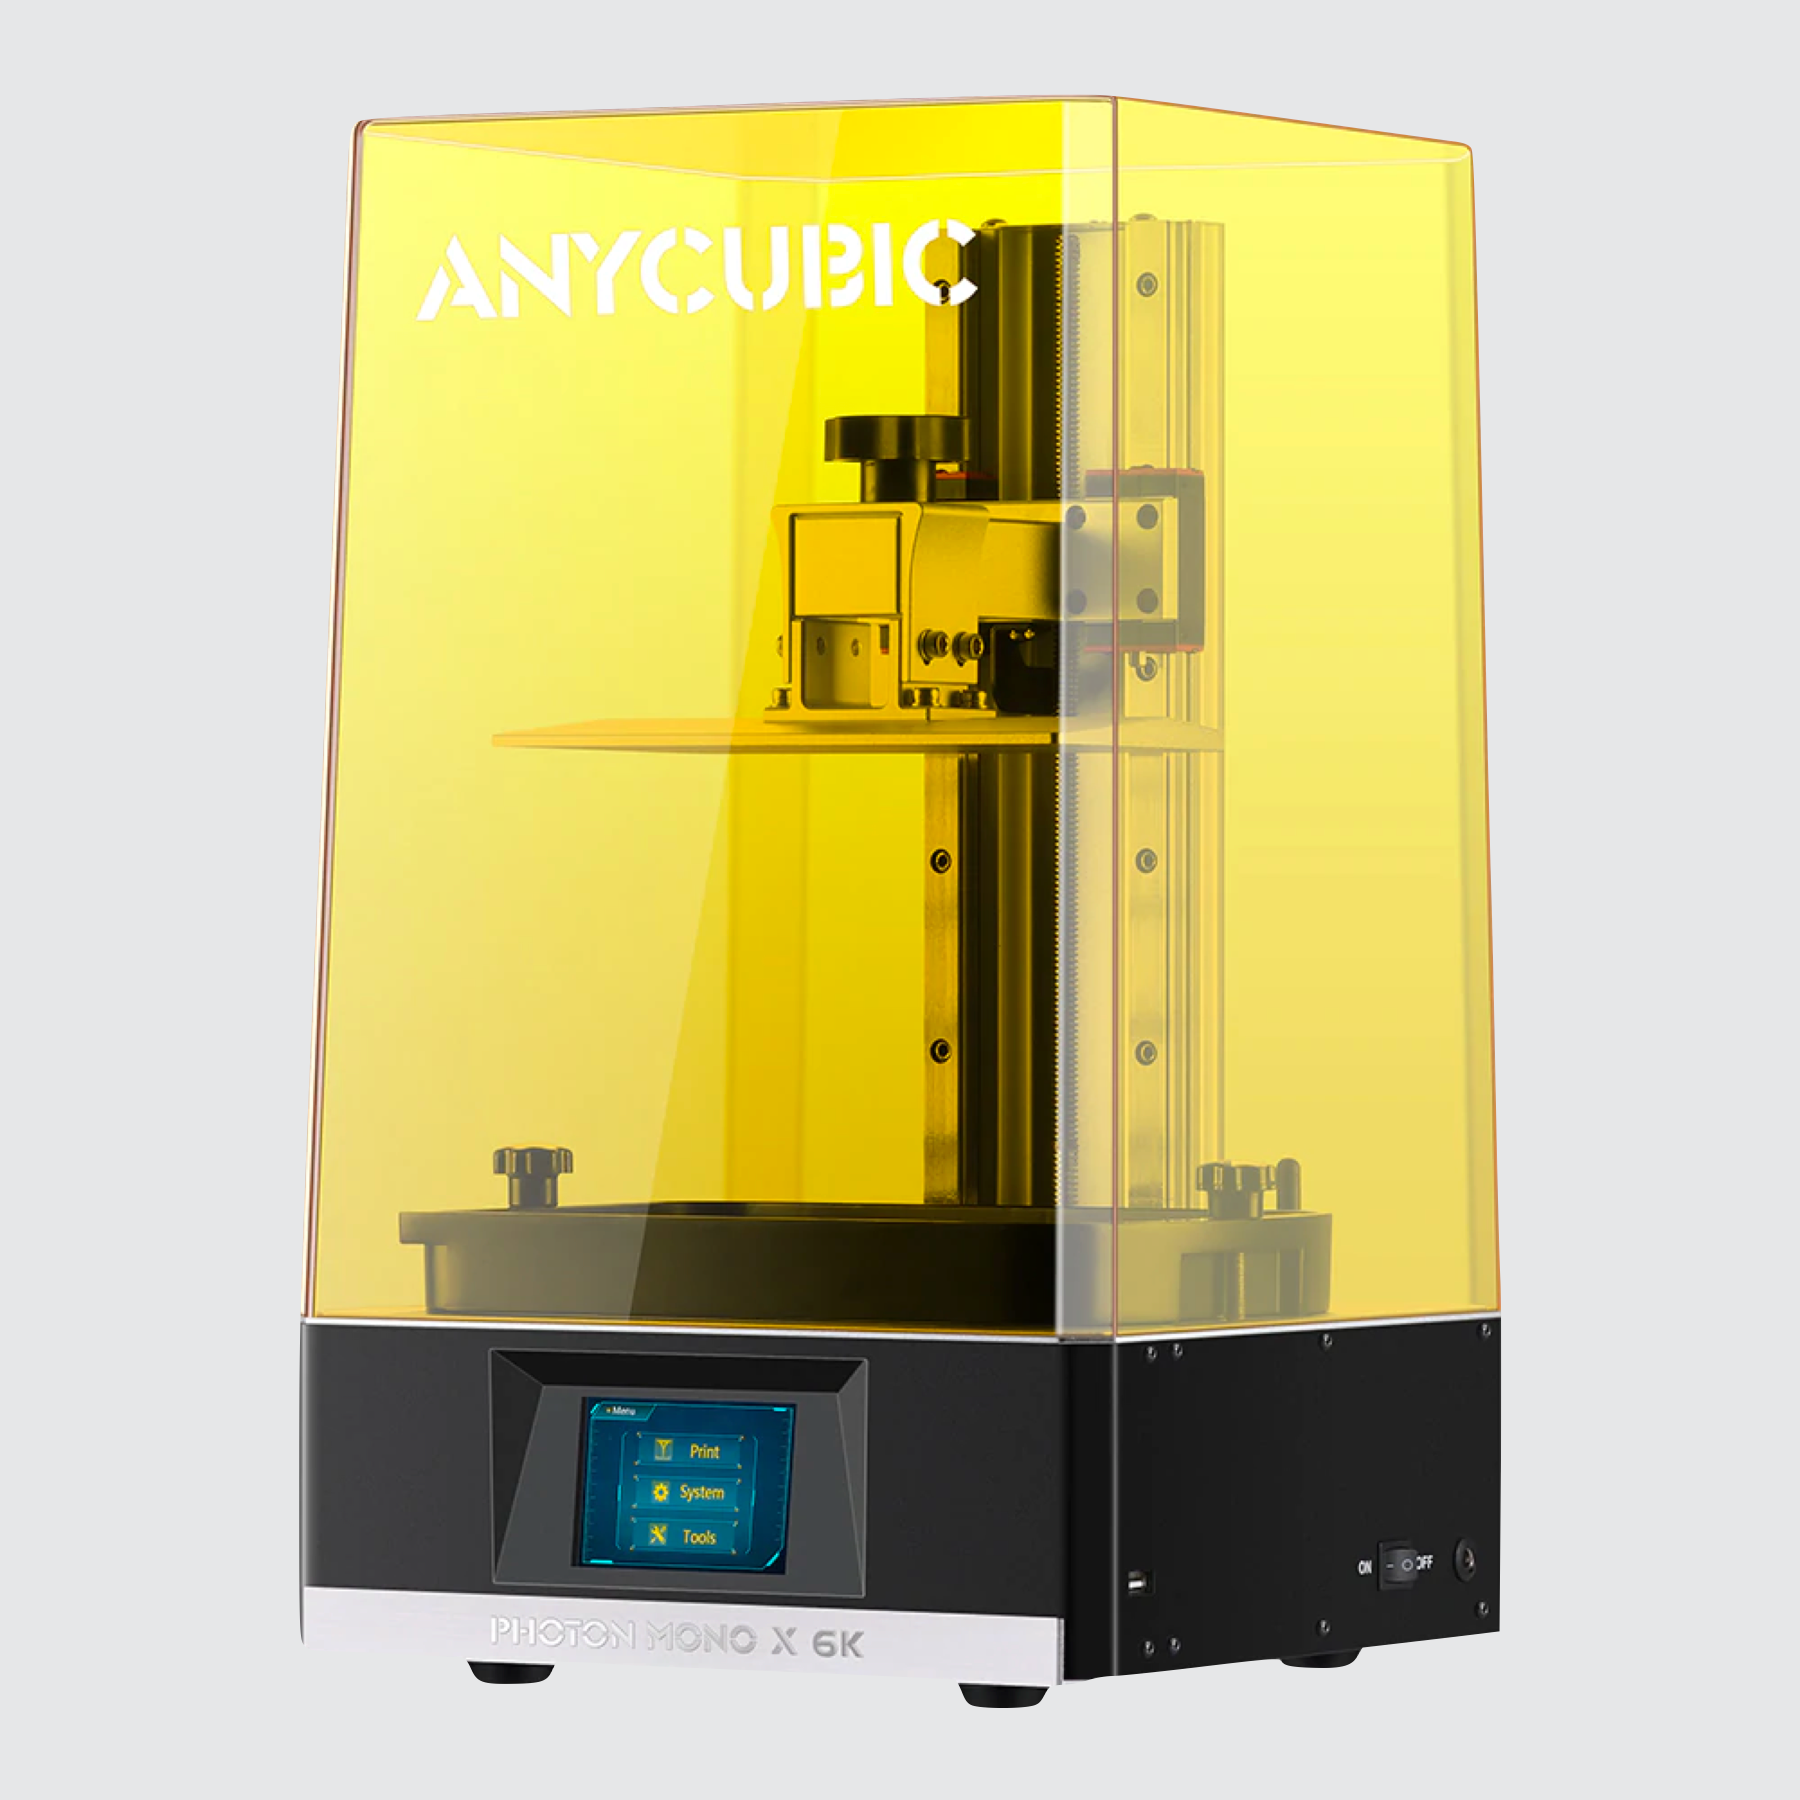 Anycubic Photon Mono X 6K - LCD 3D Printer